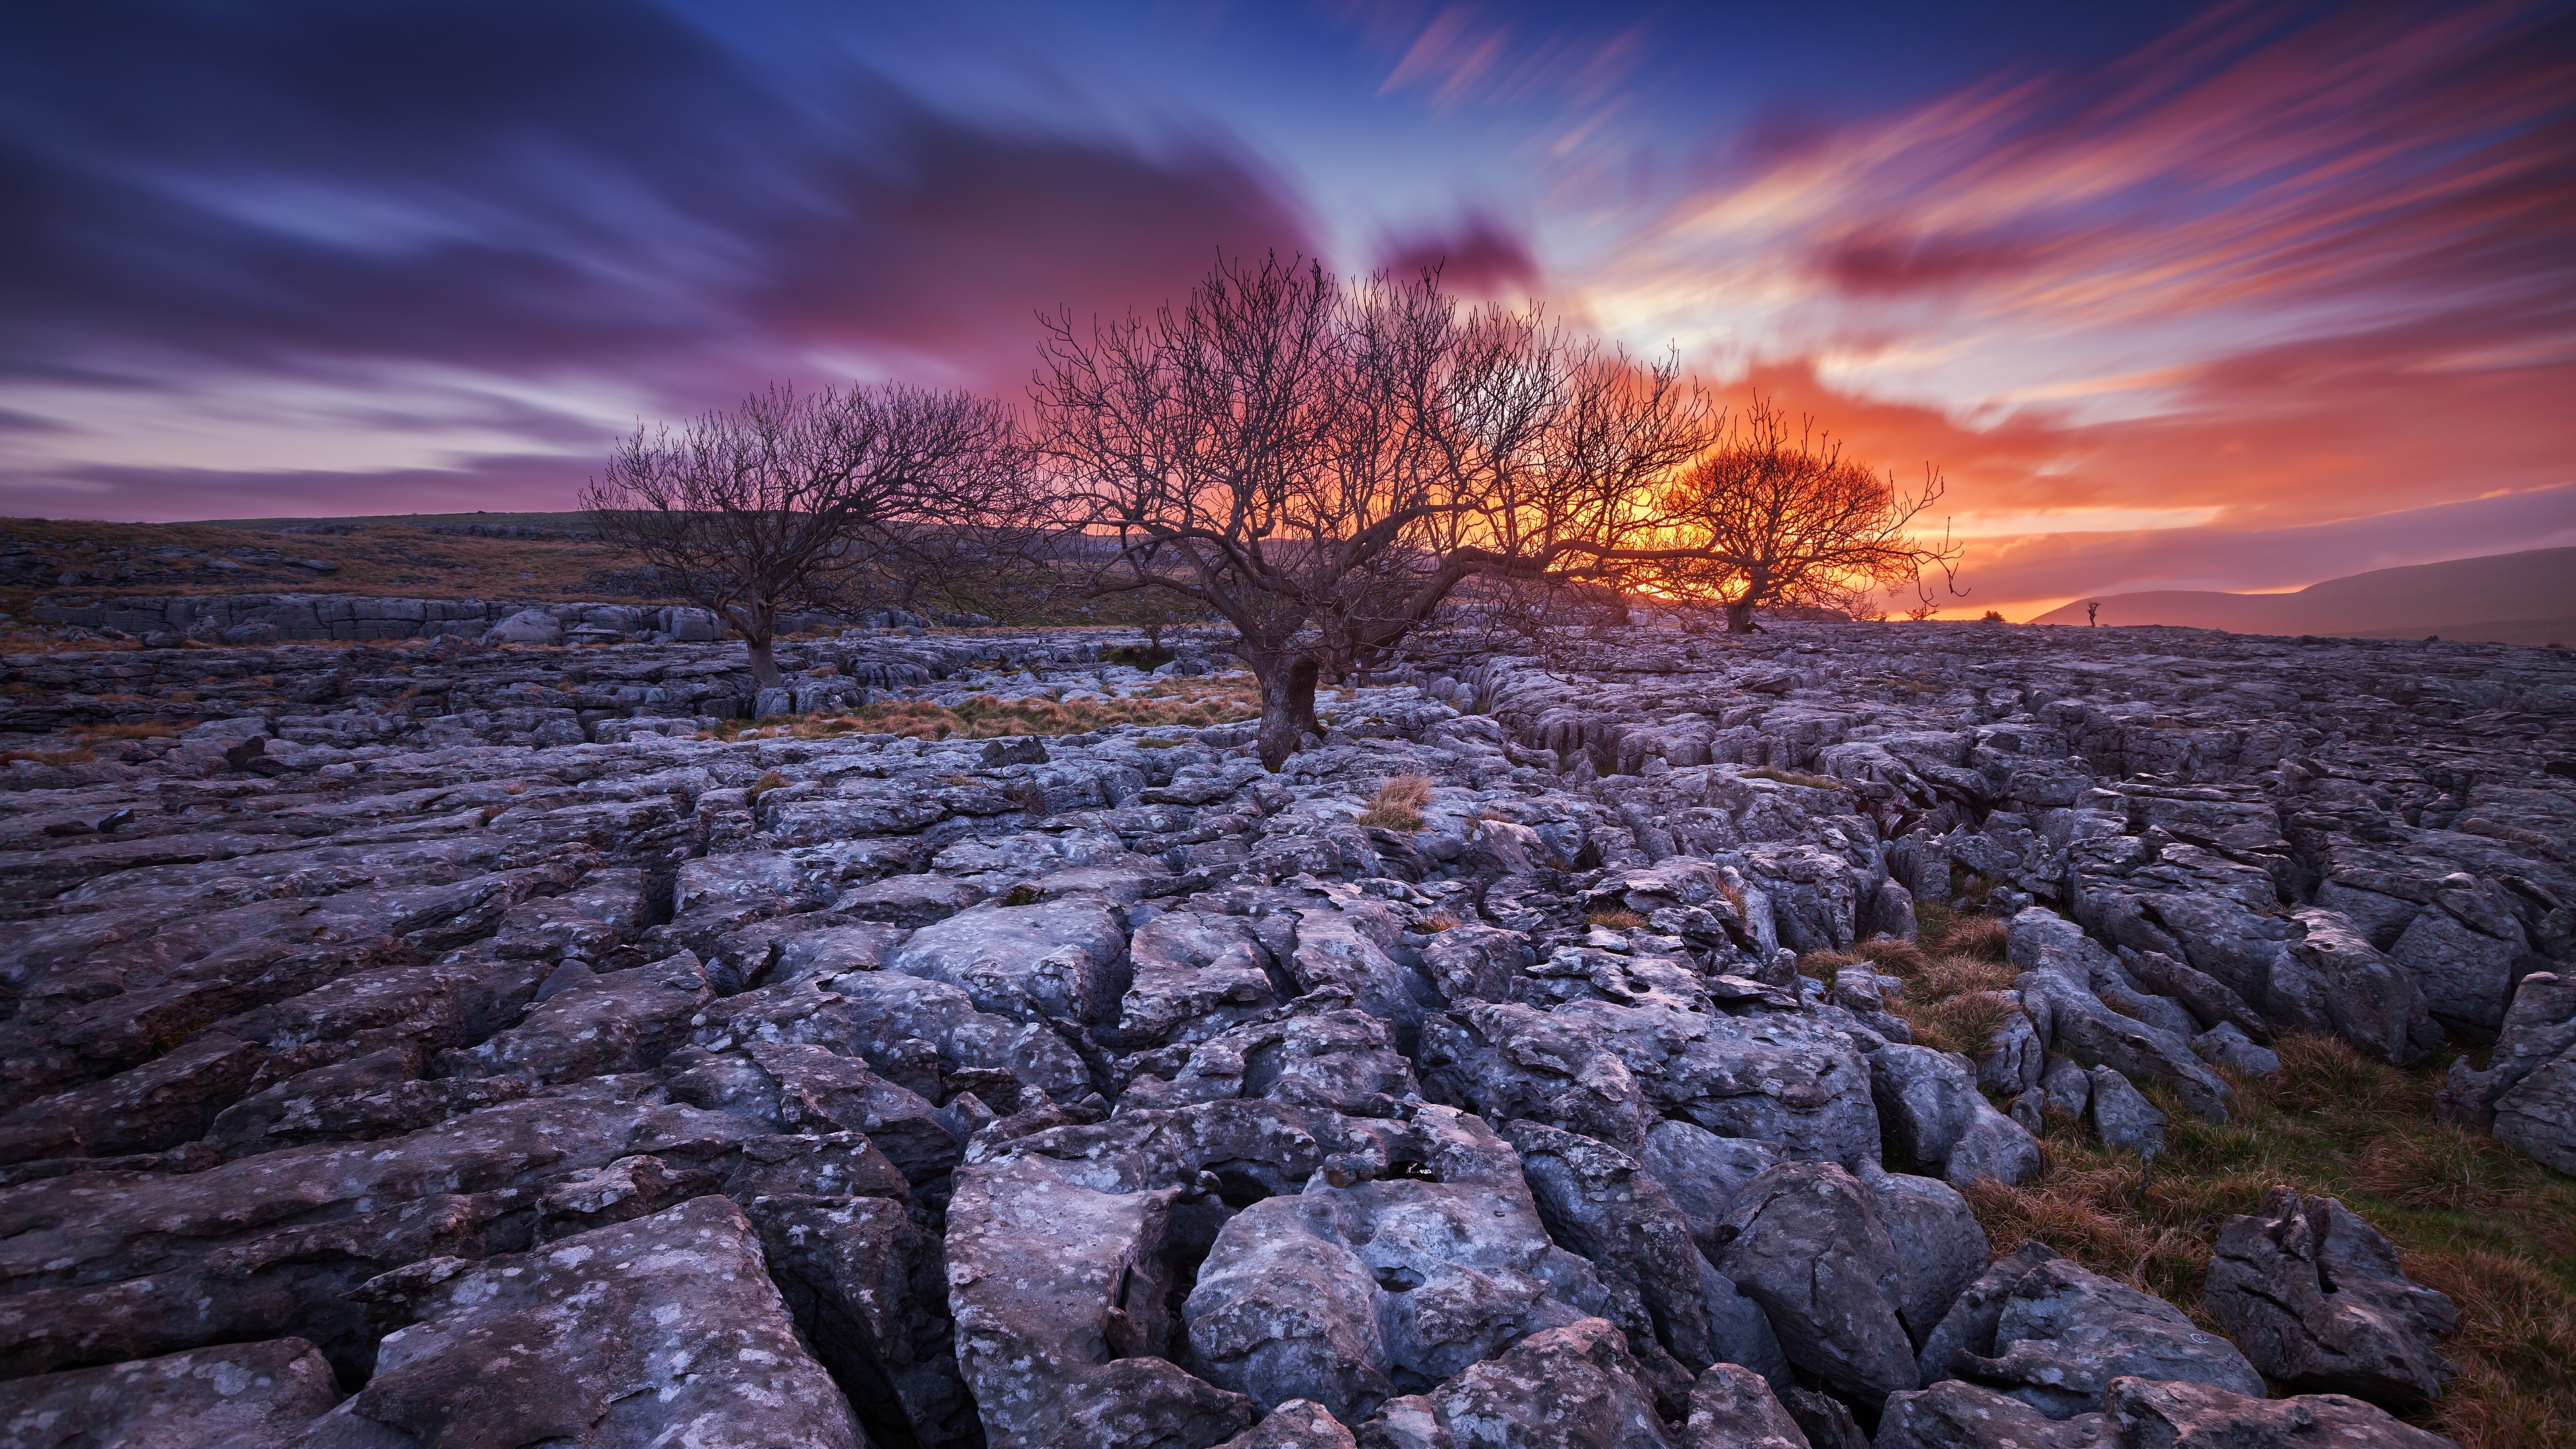 Insane Sunset Landscape for 3840 x 2160 Ultra HD resolution